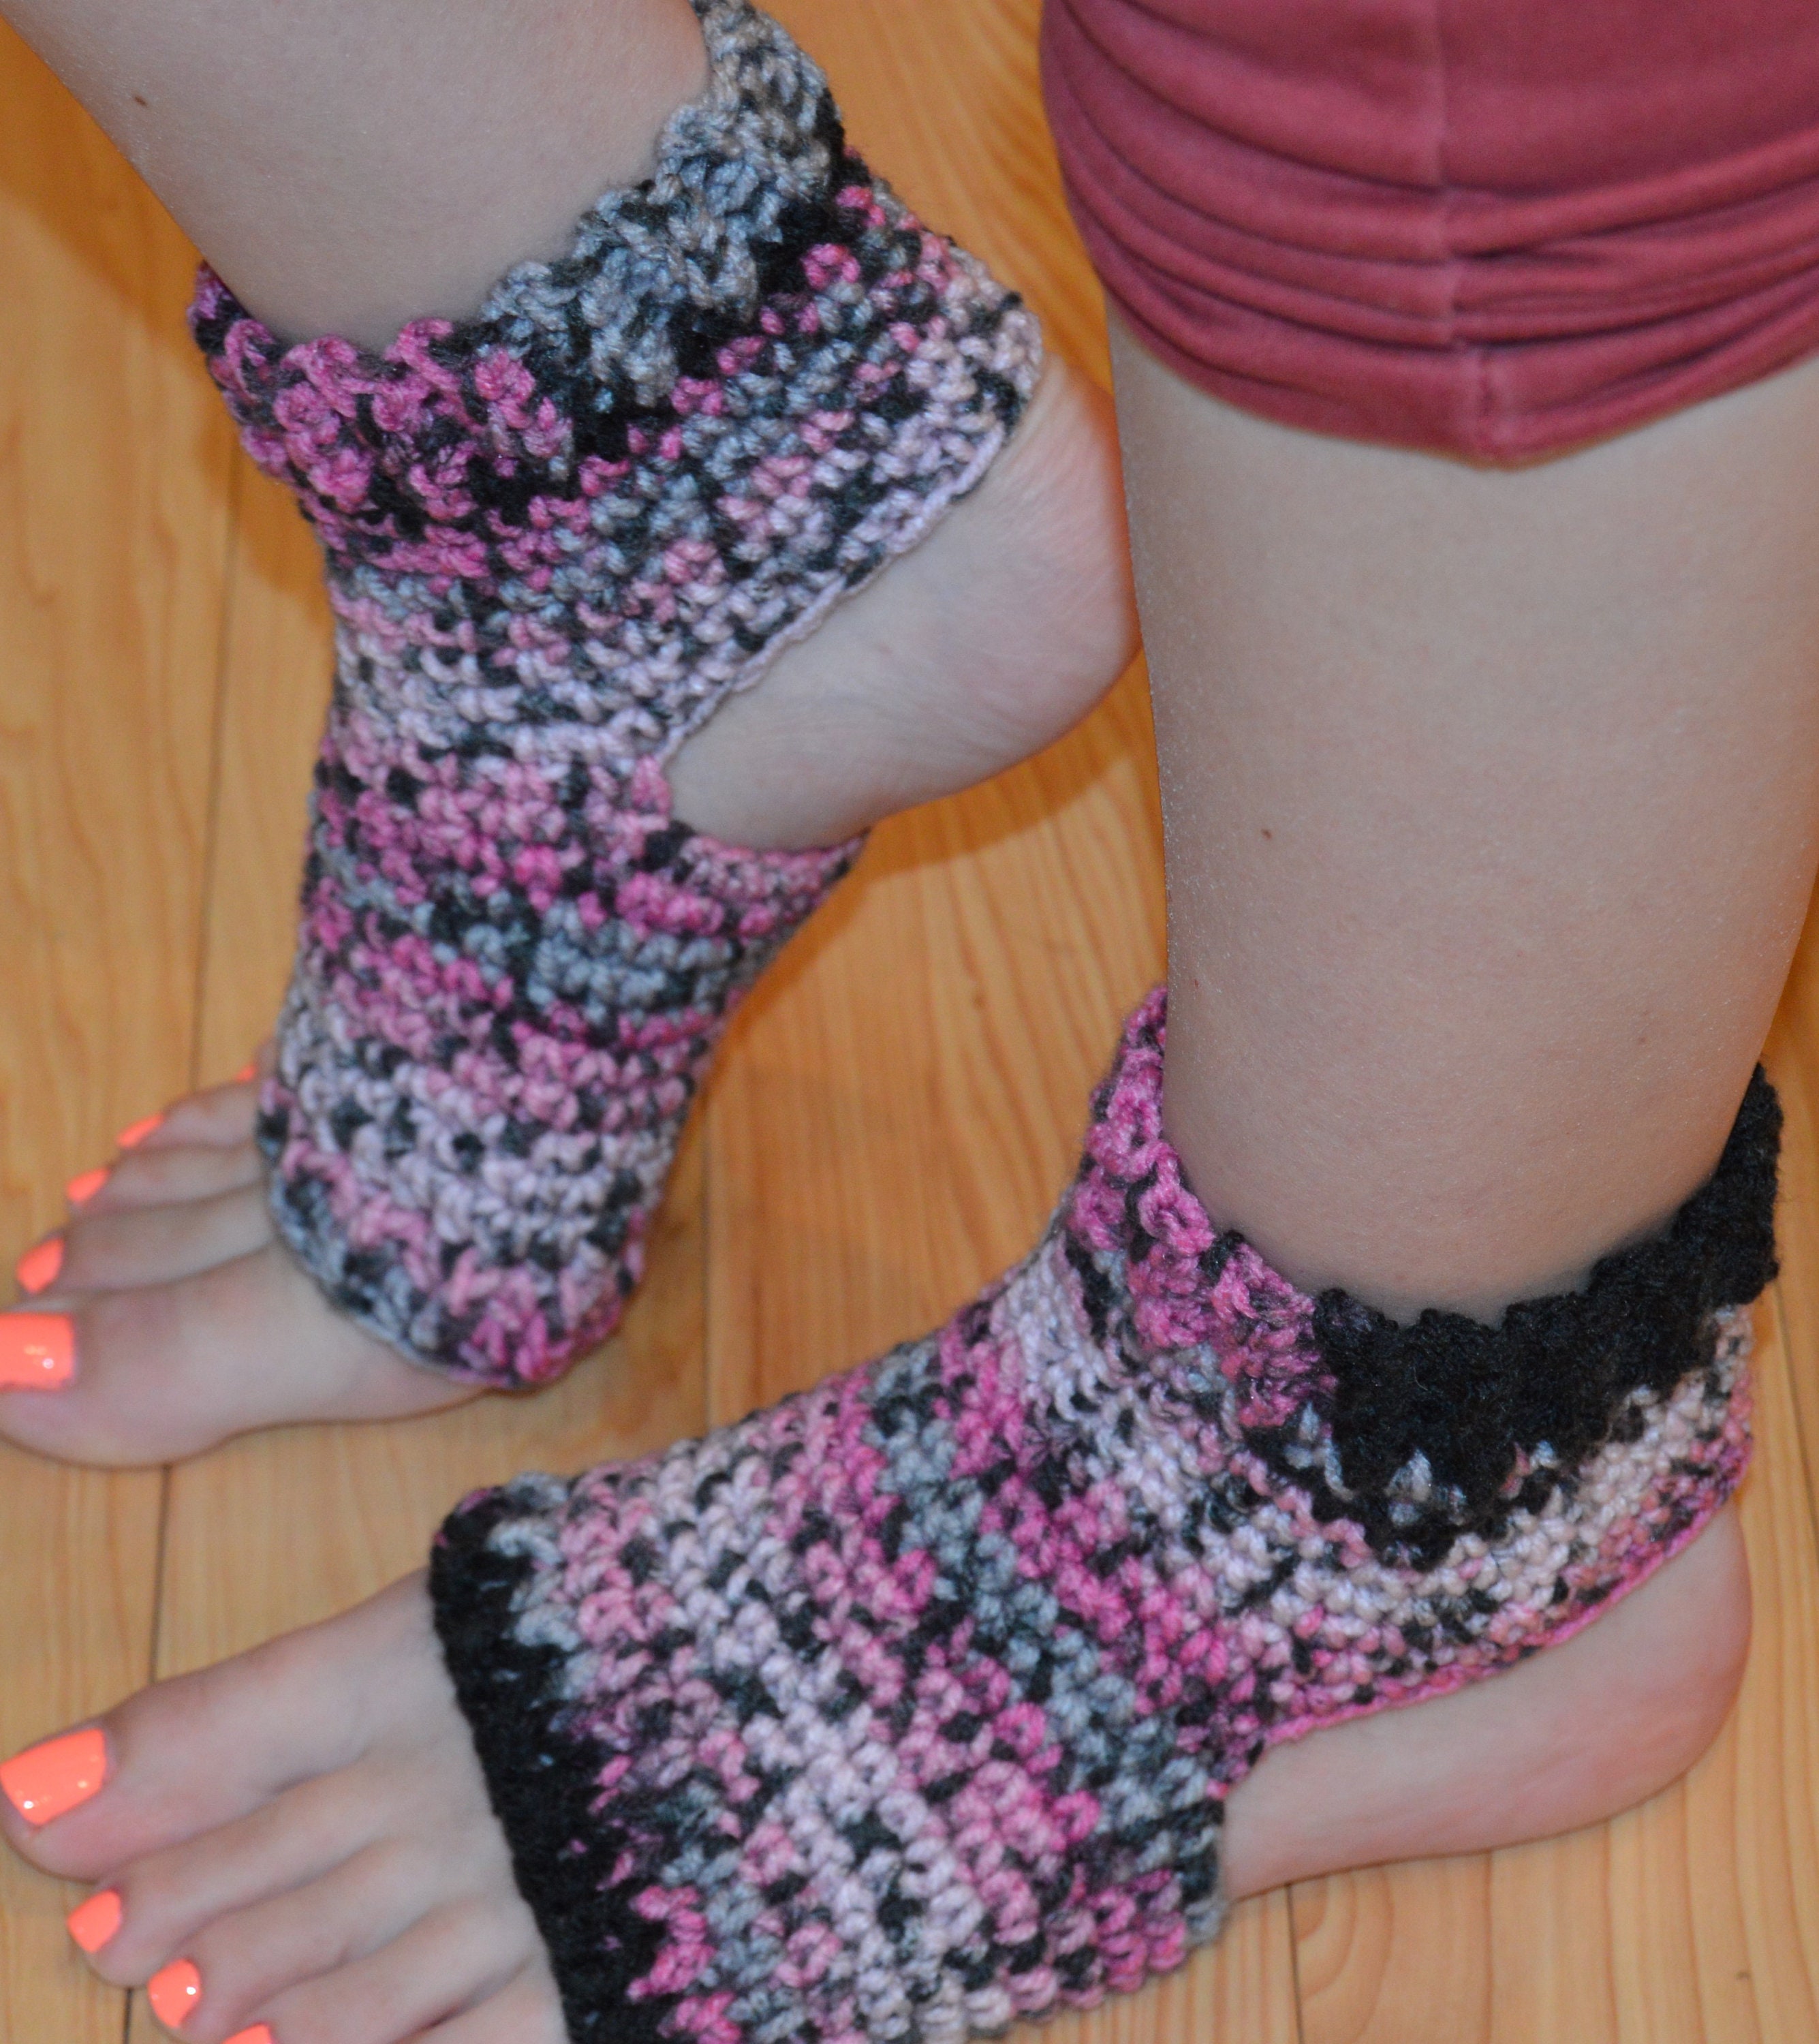 Super Comfortable Toeless Socks-2 Pairs Perfect Yoga Socks, Dance